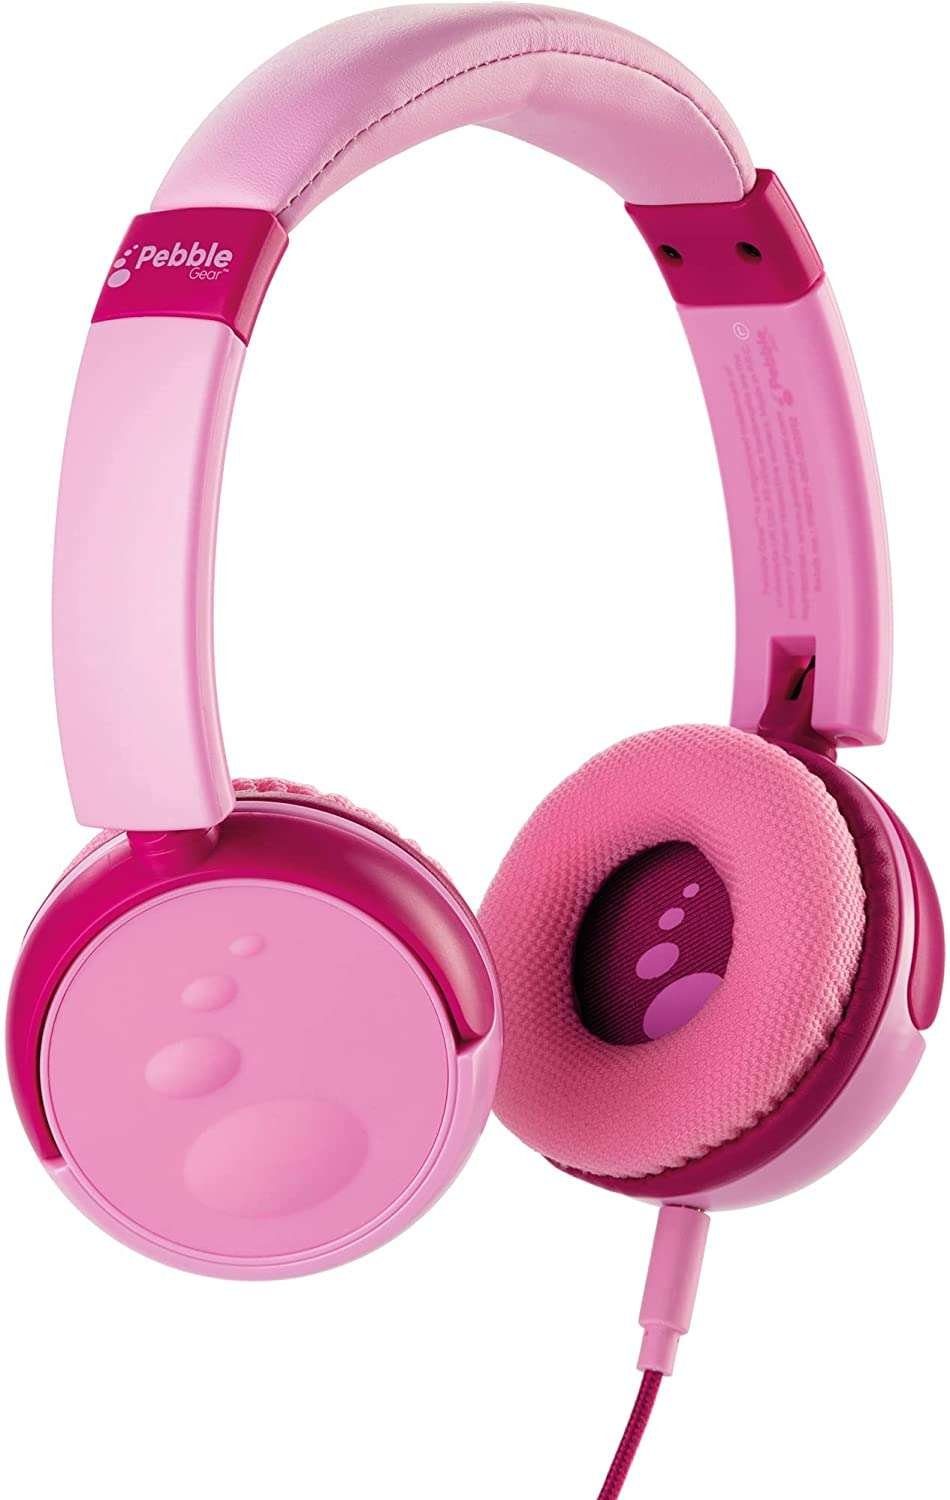 Pebble Gear Kinderkopfhörer blau/ pink - kindersicher 85 dB Lautstärkebegrenzung Kinder-Kopfhörer (3,5mm Klinke faltbar, Kids-Design)